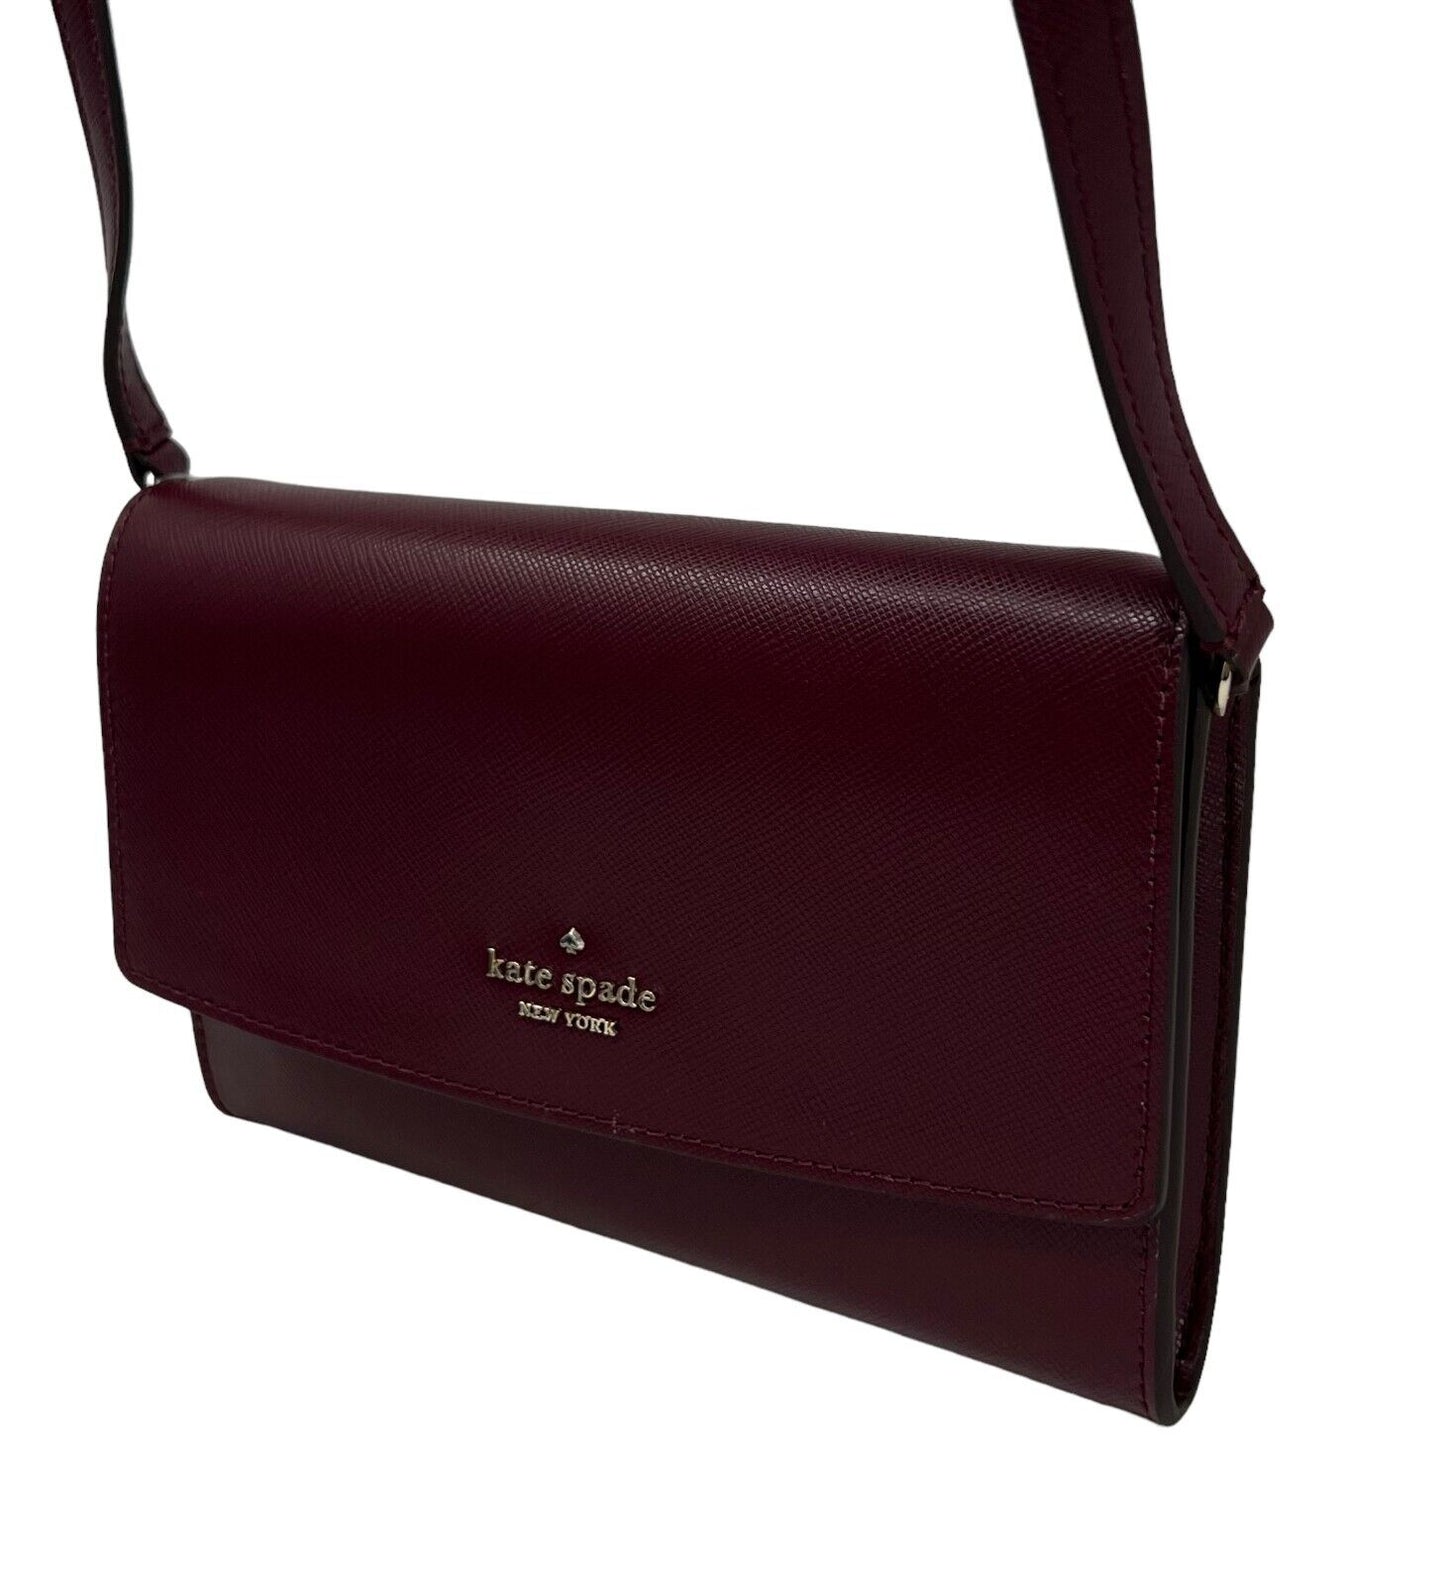 Kate Spade Perry Saffiano Leather Deep Berry Crossbody Bag K8709 $239